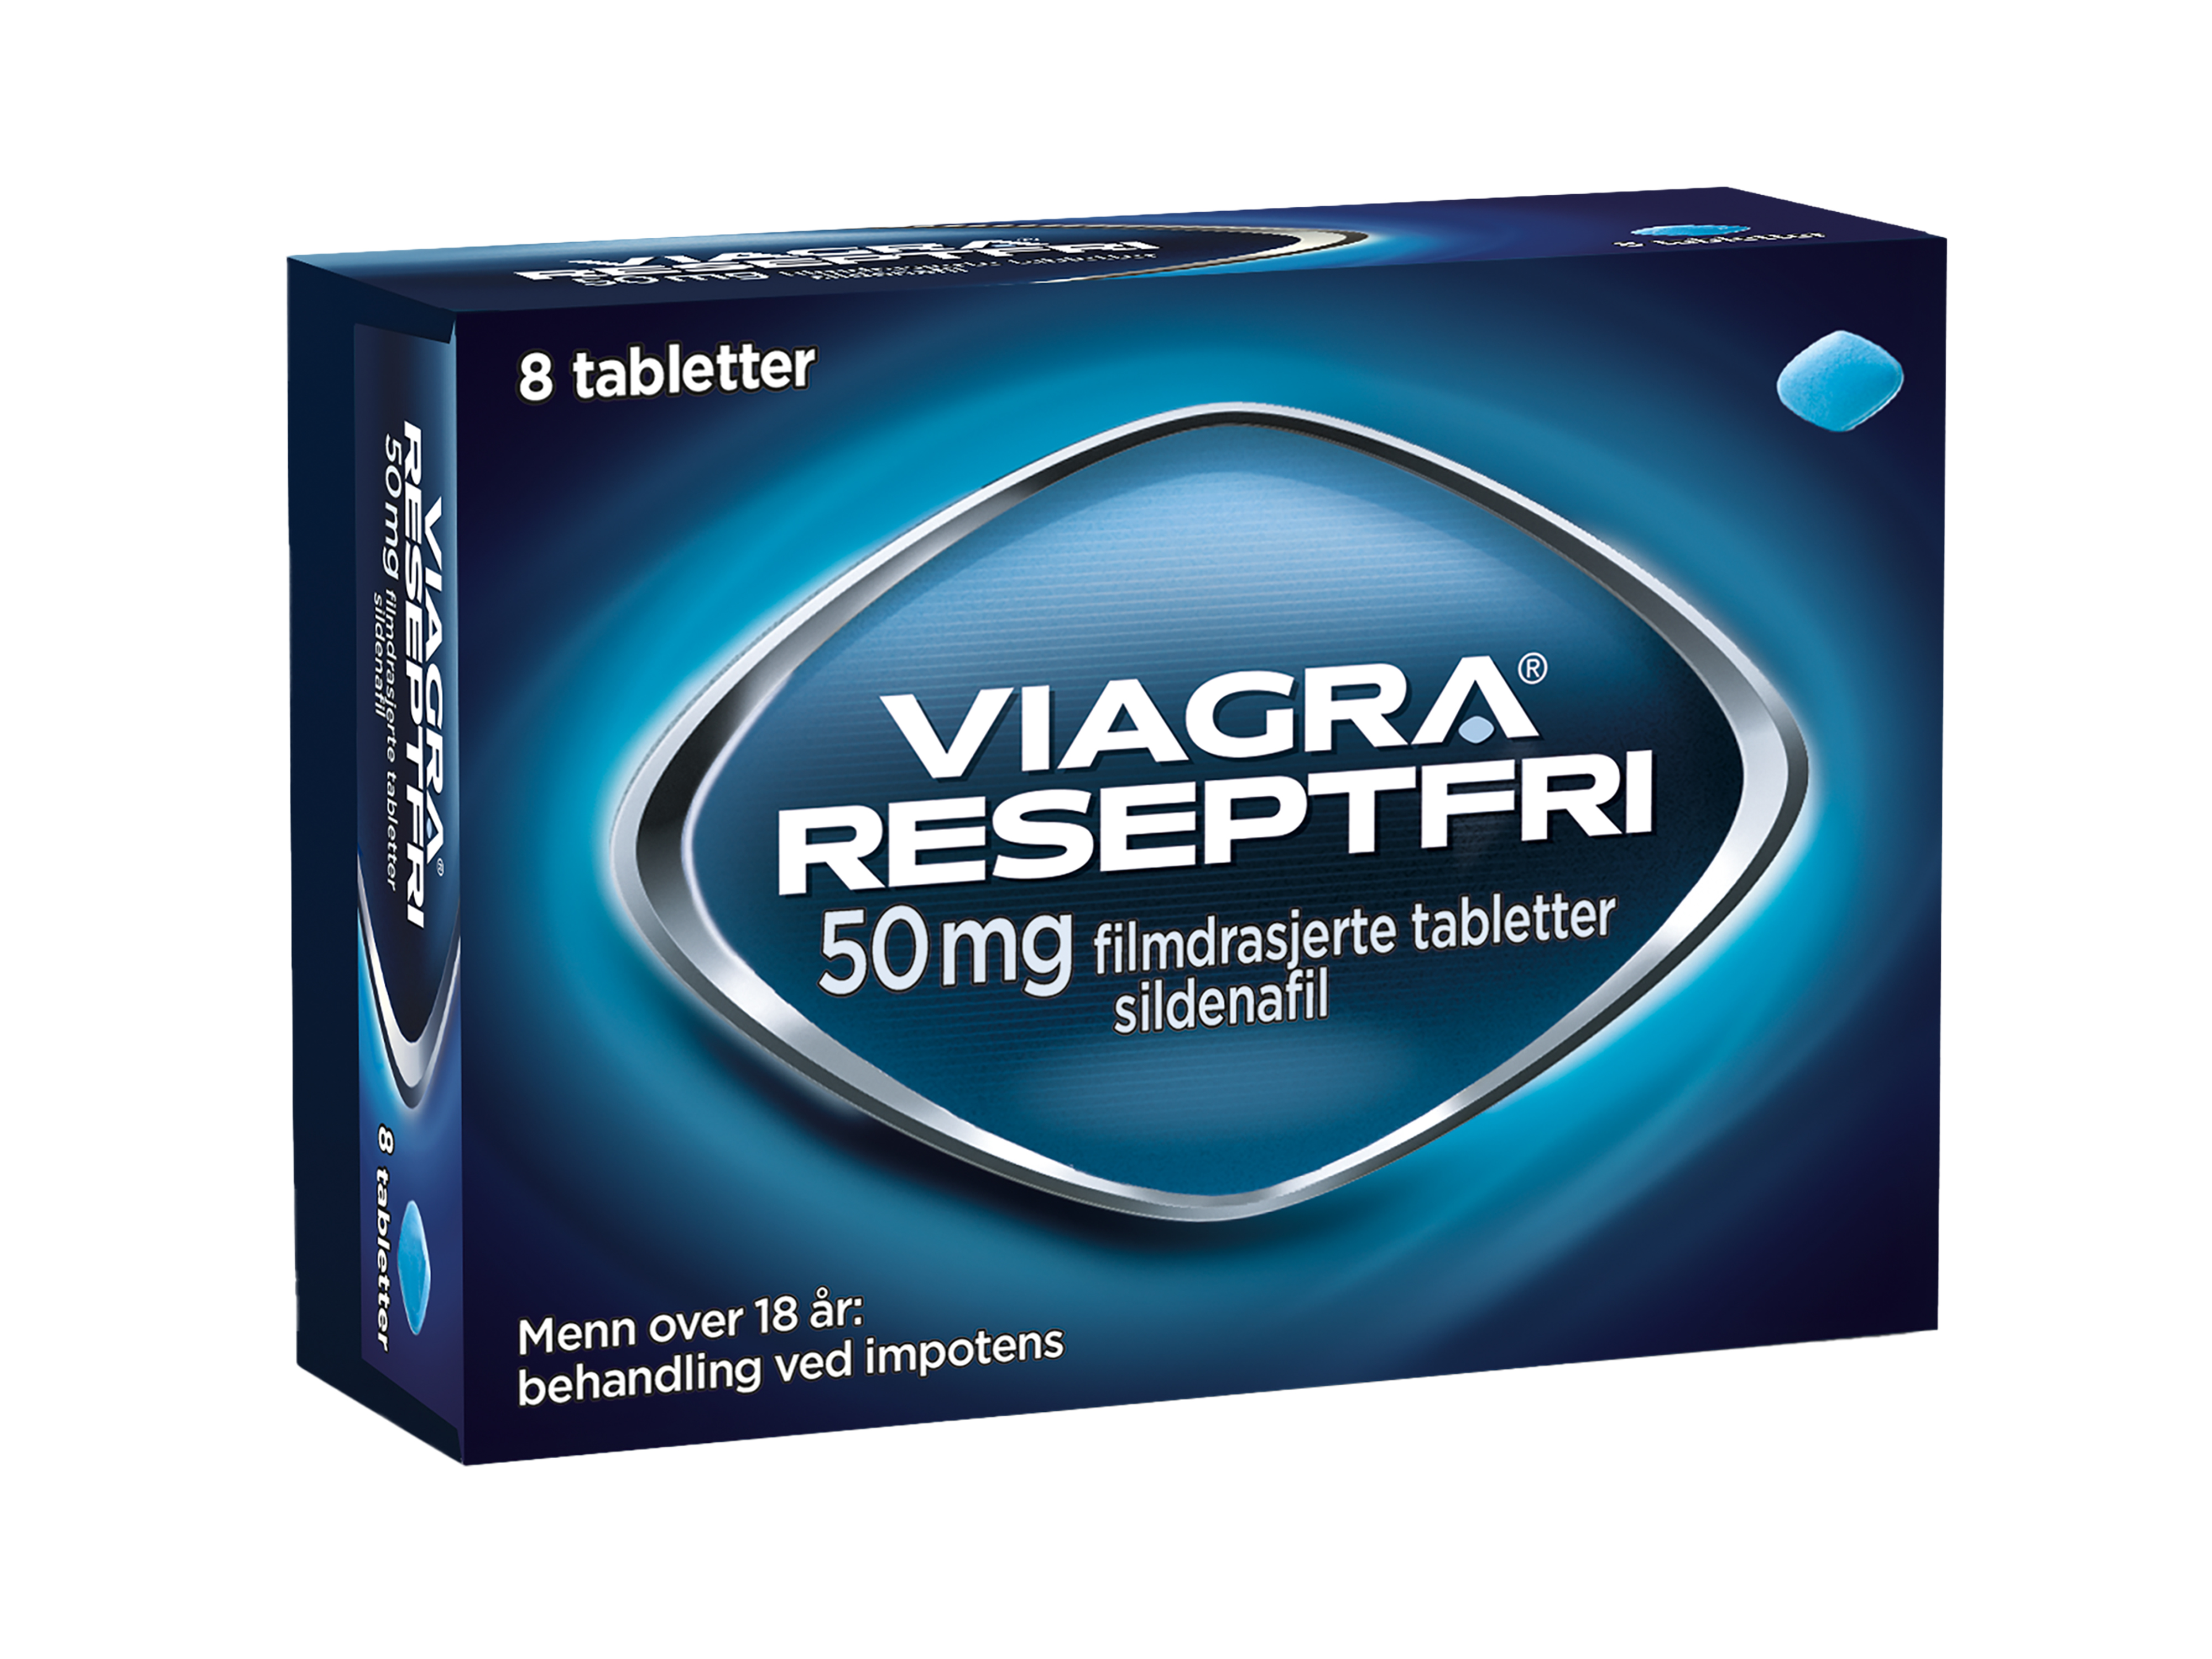 Viagra Reseptfri® 50 mg tabletter, 8 stk.